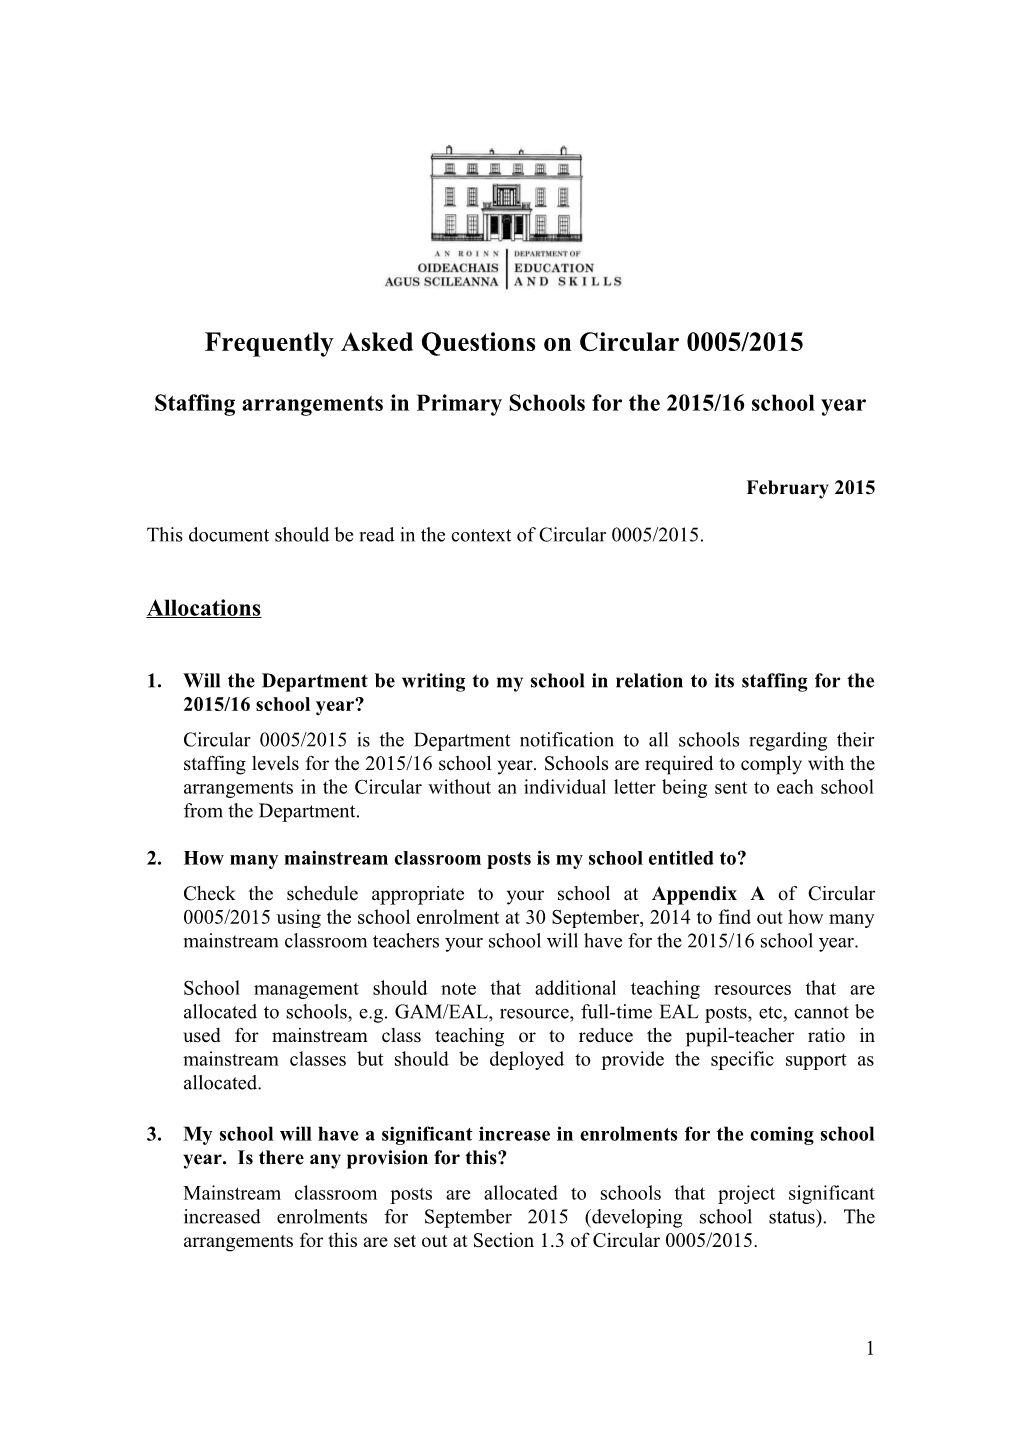 Staffing Arrangements in Primary Schools for the 2015/16 School Year